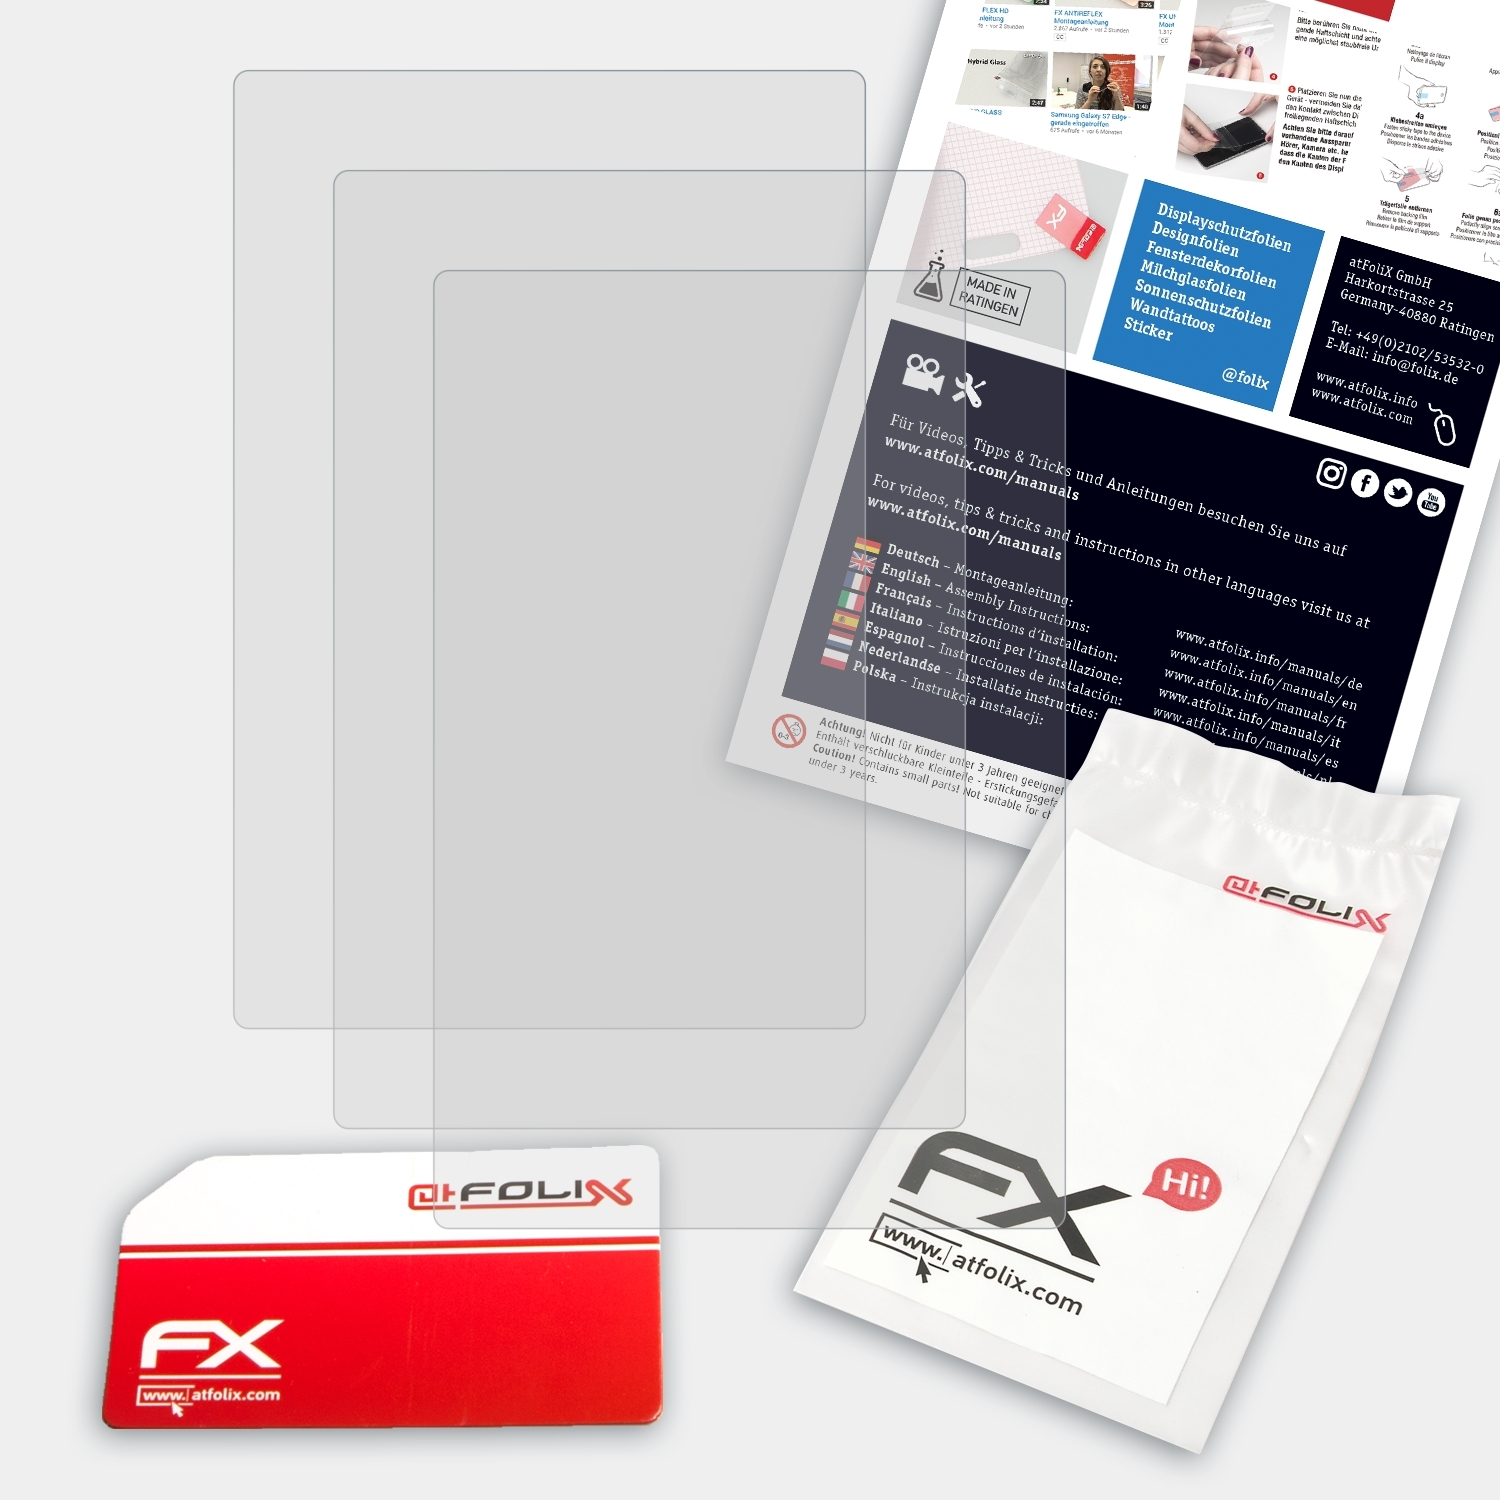 ATFOLIX X8) Xperia FX-Antireflex Sony-Ericsson 3x Displayschutz(für